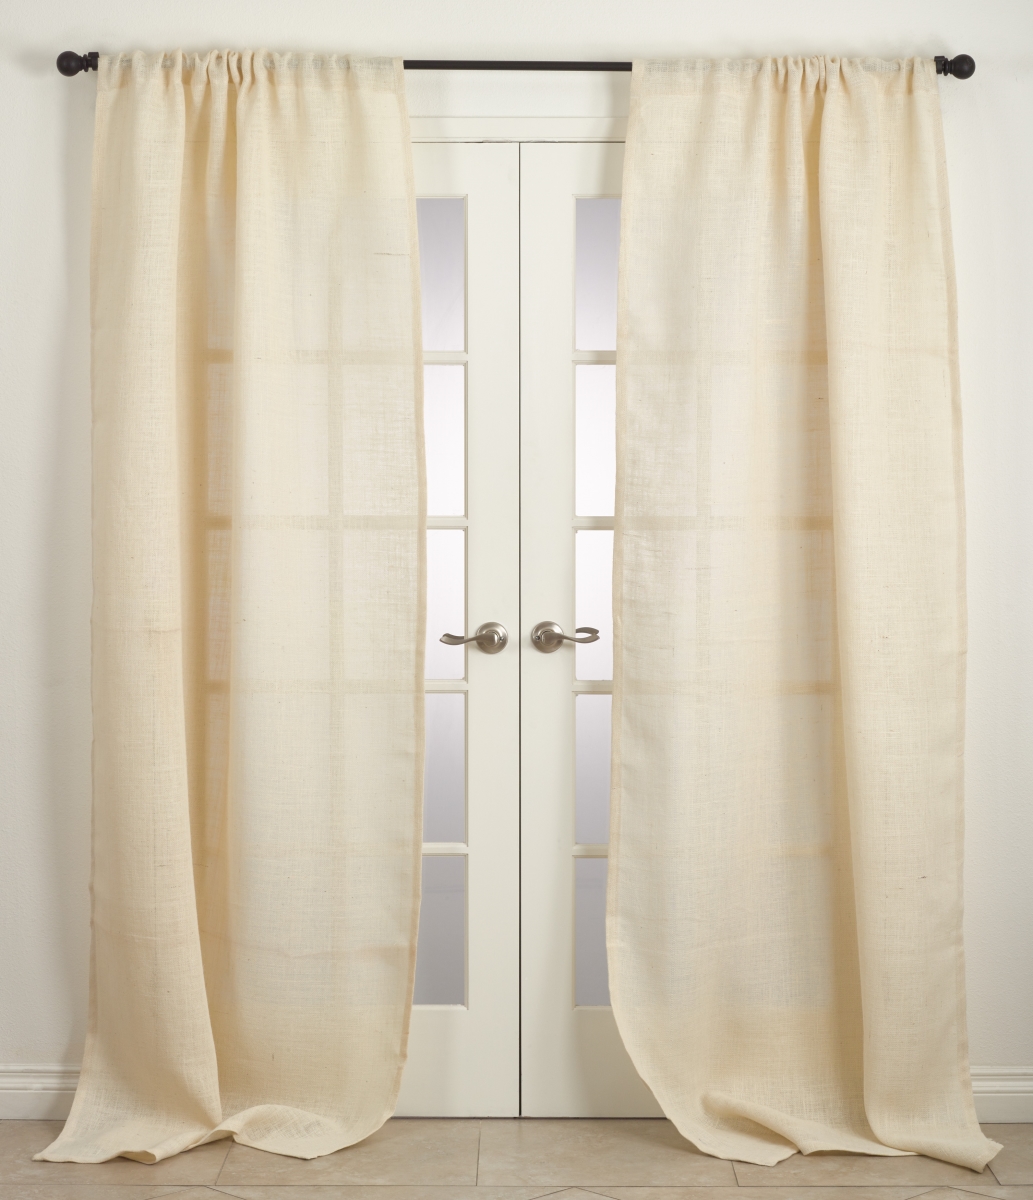 0812.i4296 Open Weave Burlap Unlined Curtain Panel - Ivory